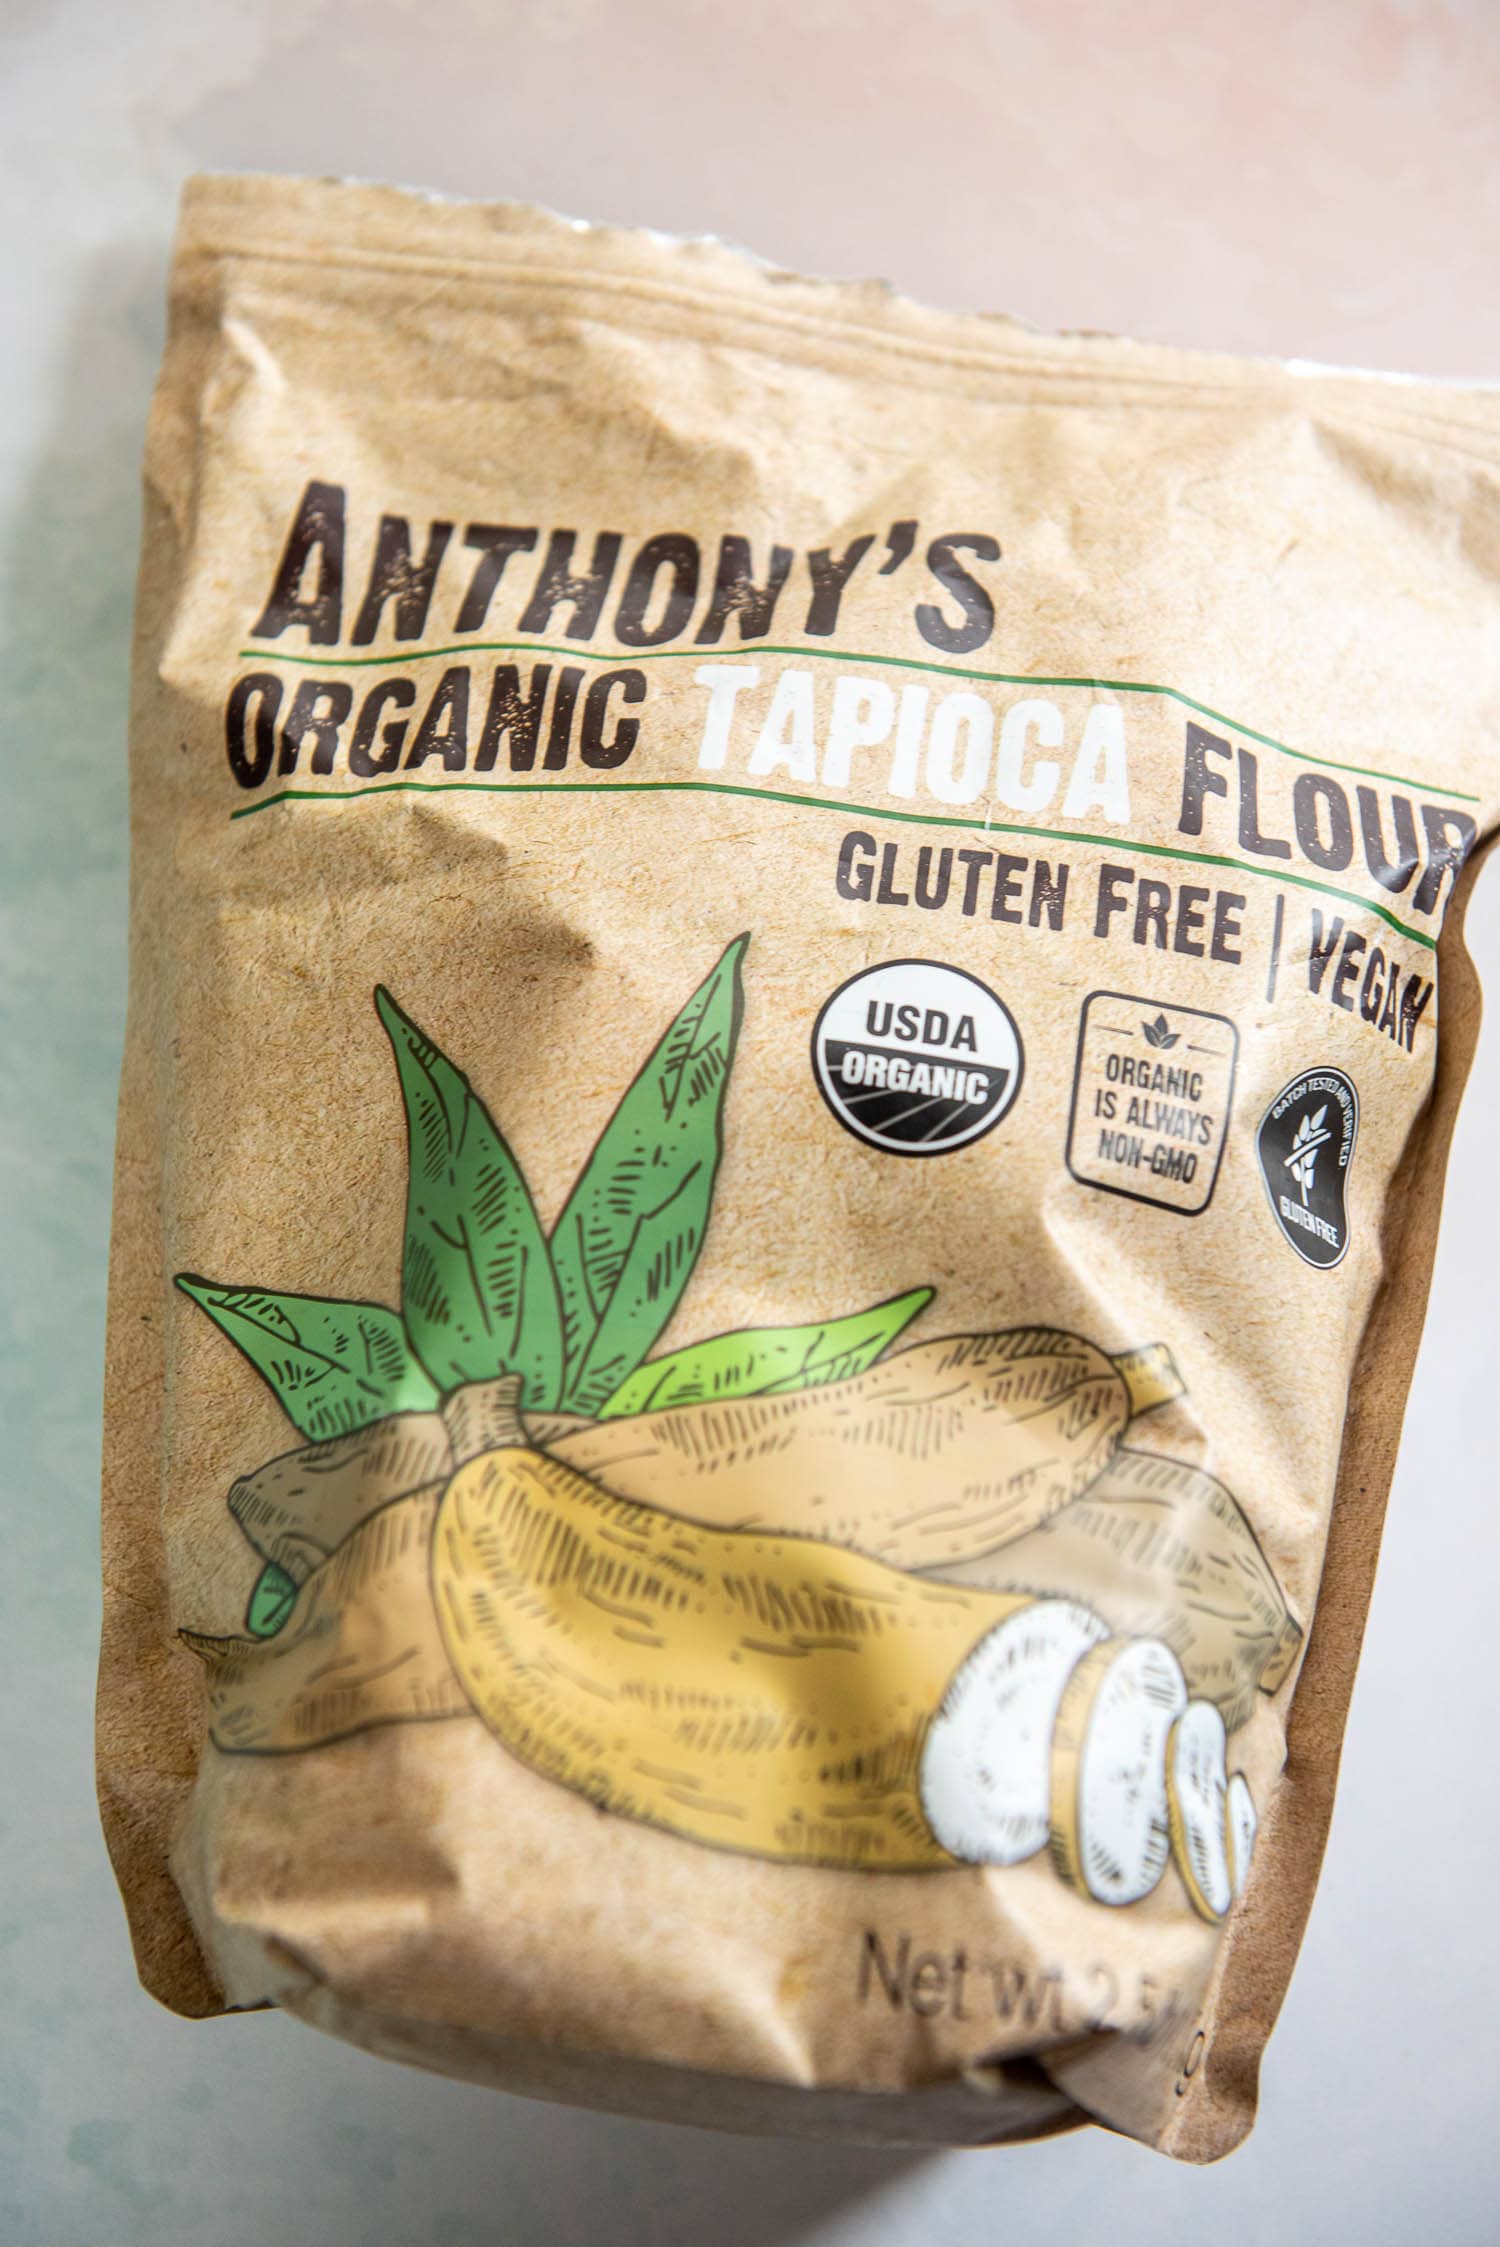 bag of anthony's organic tapioca flour gluten free began